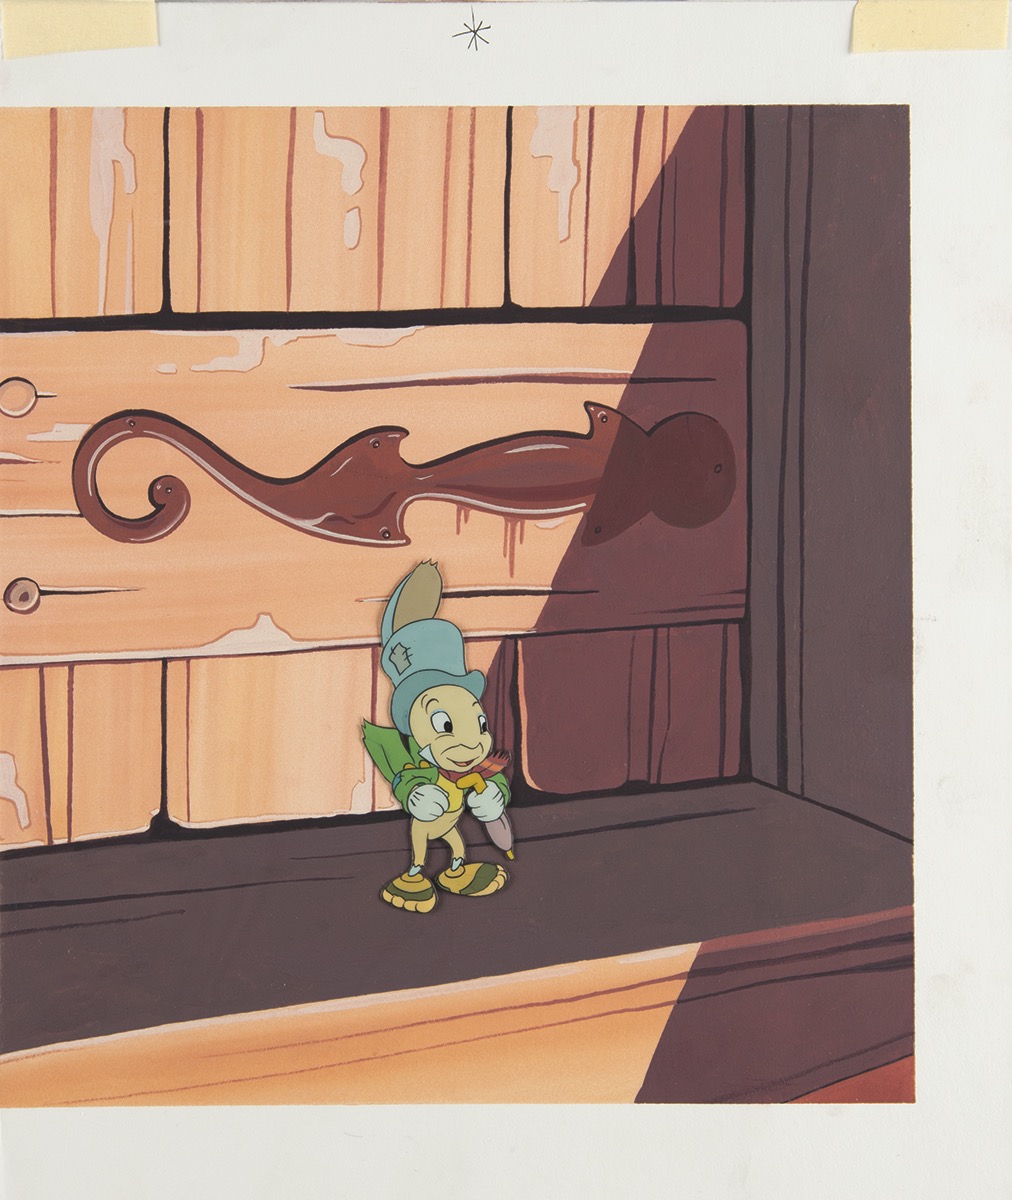 Lot #457 Jiminy Cricket production cel from Pinocchio - Image 2